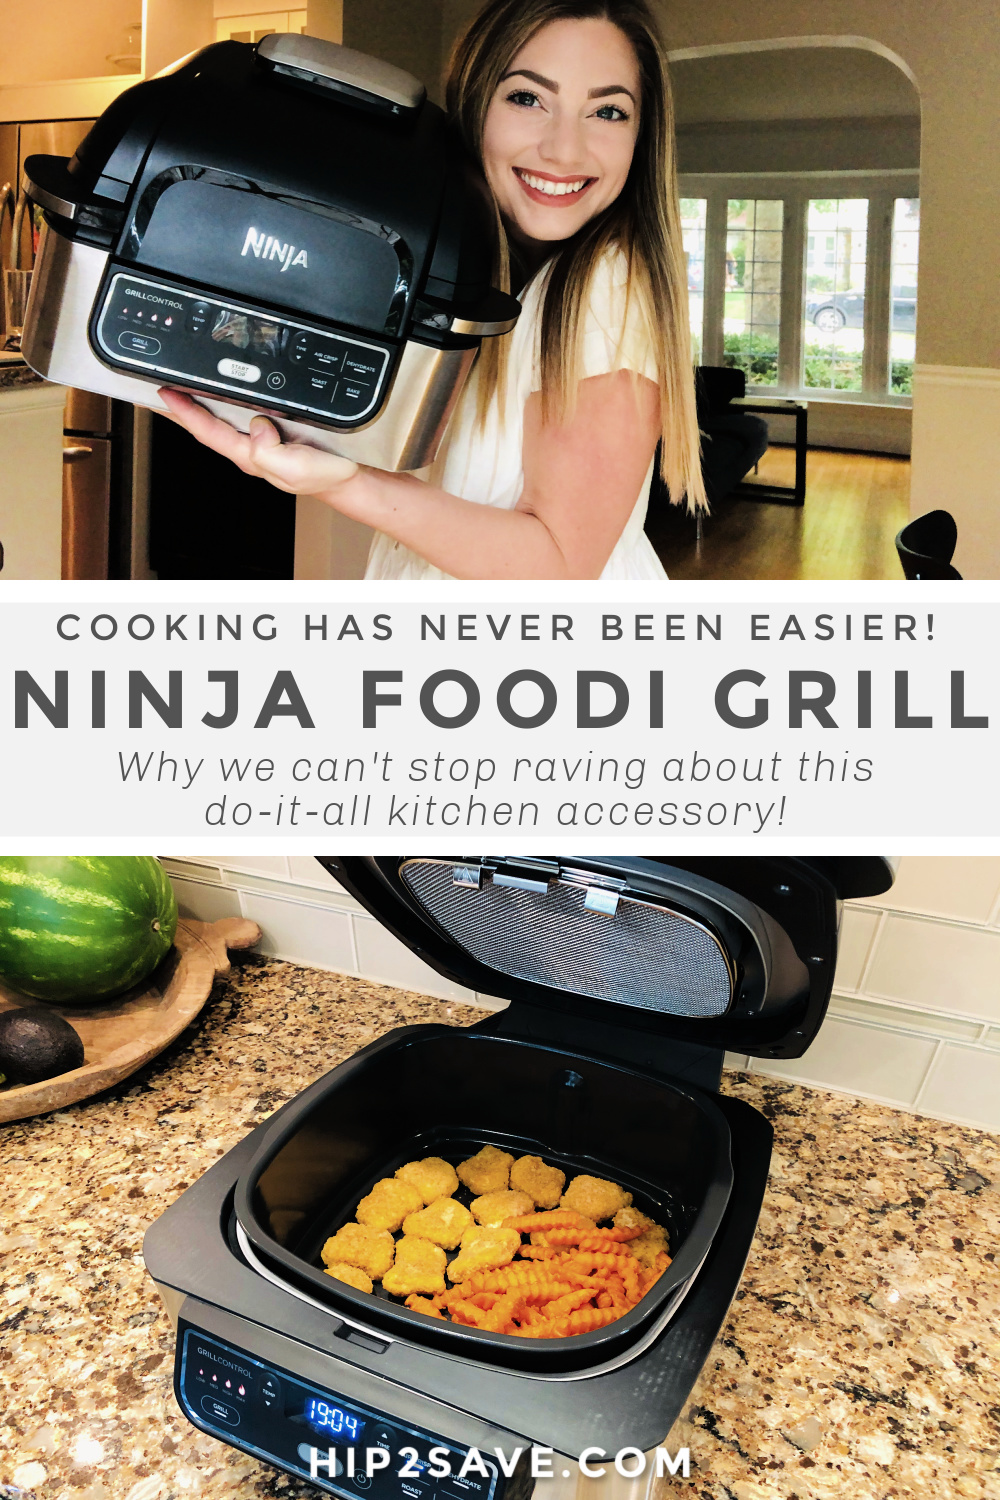 https://hip2save.com/wp-content/uploads/2020/08/ninja-foodi-grill-pinterest.jpg?fit=1000%2C1500&strip=all